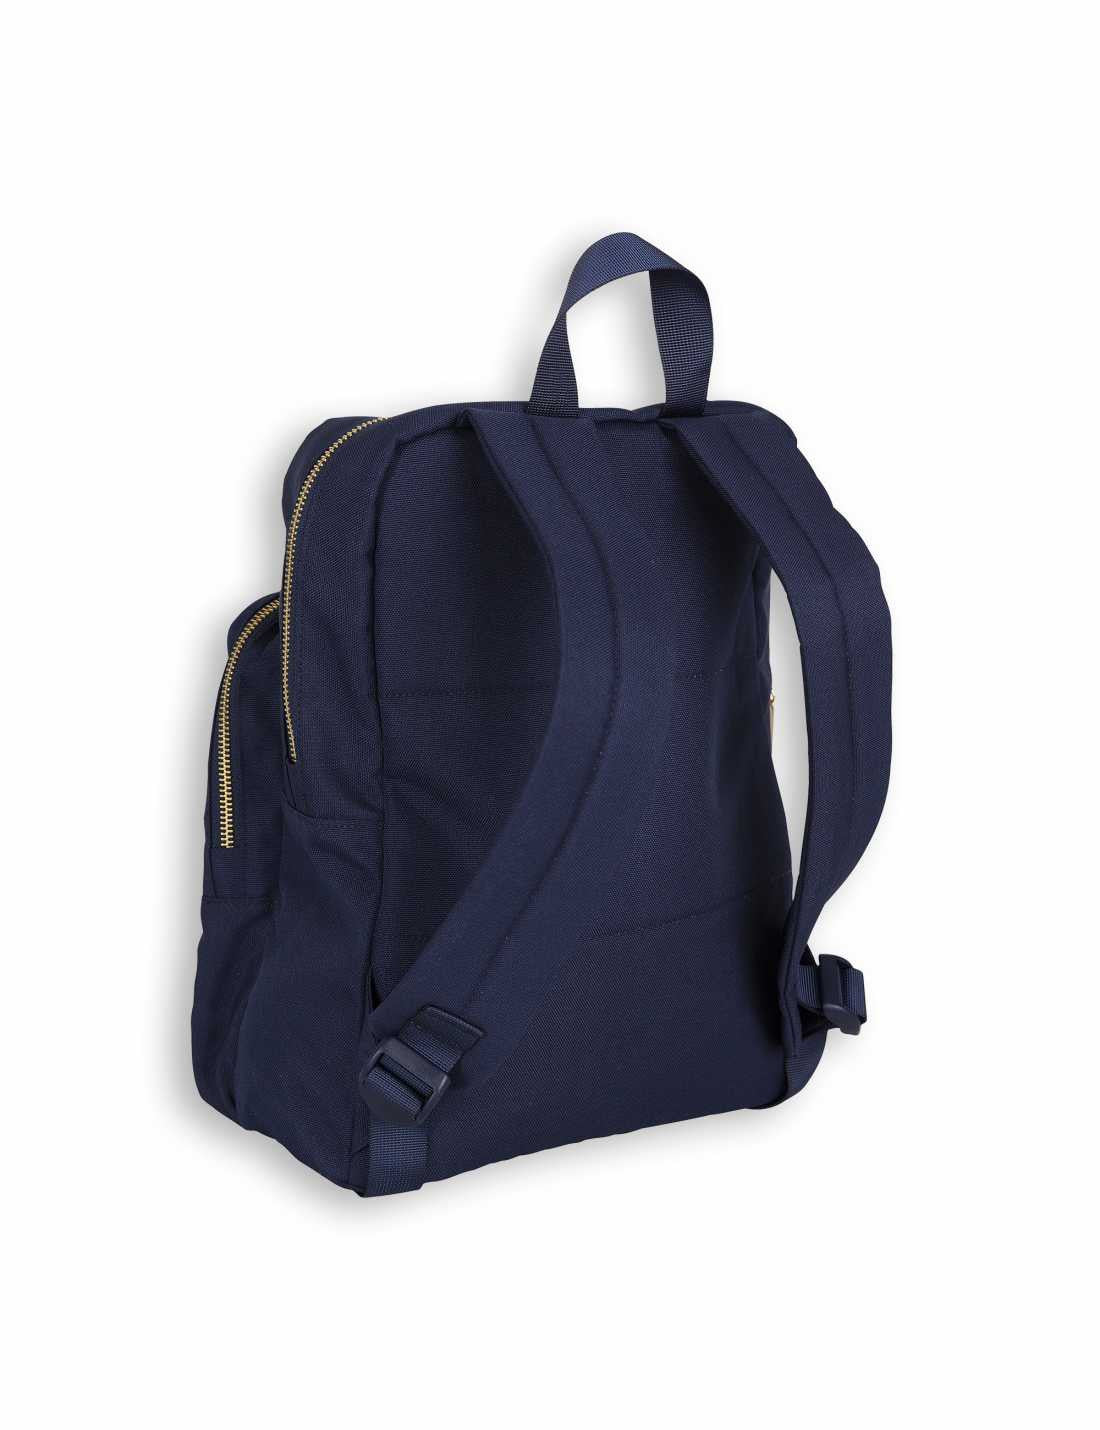 Boys & Girls Dark Blue Panda Printed Backpack - CÉMAROSE | Children's Fashion Store - 2